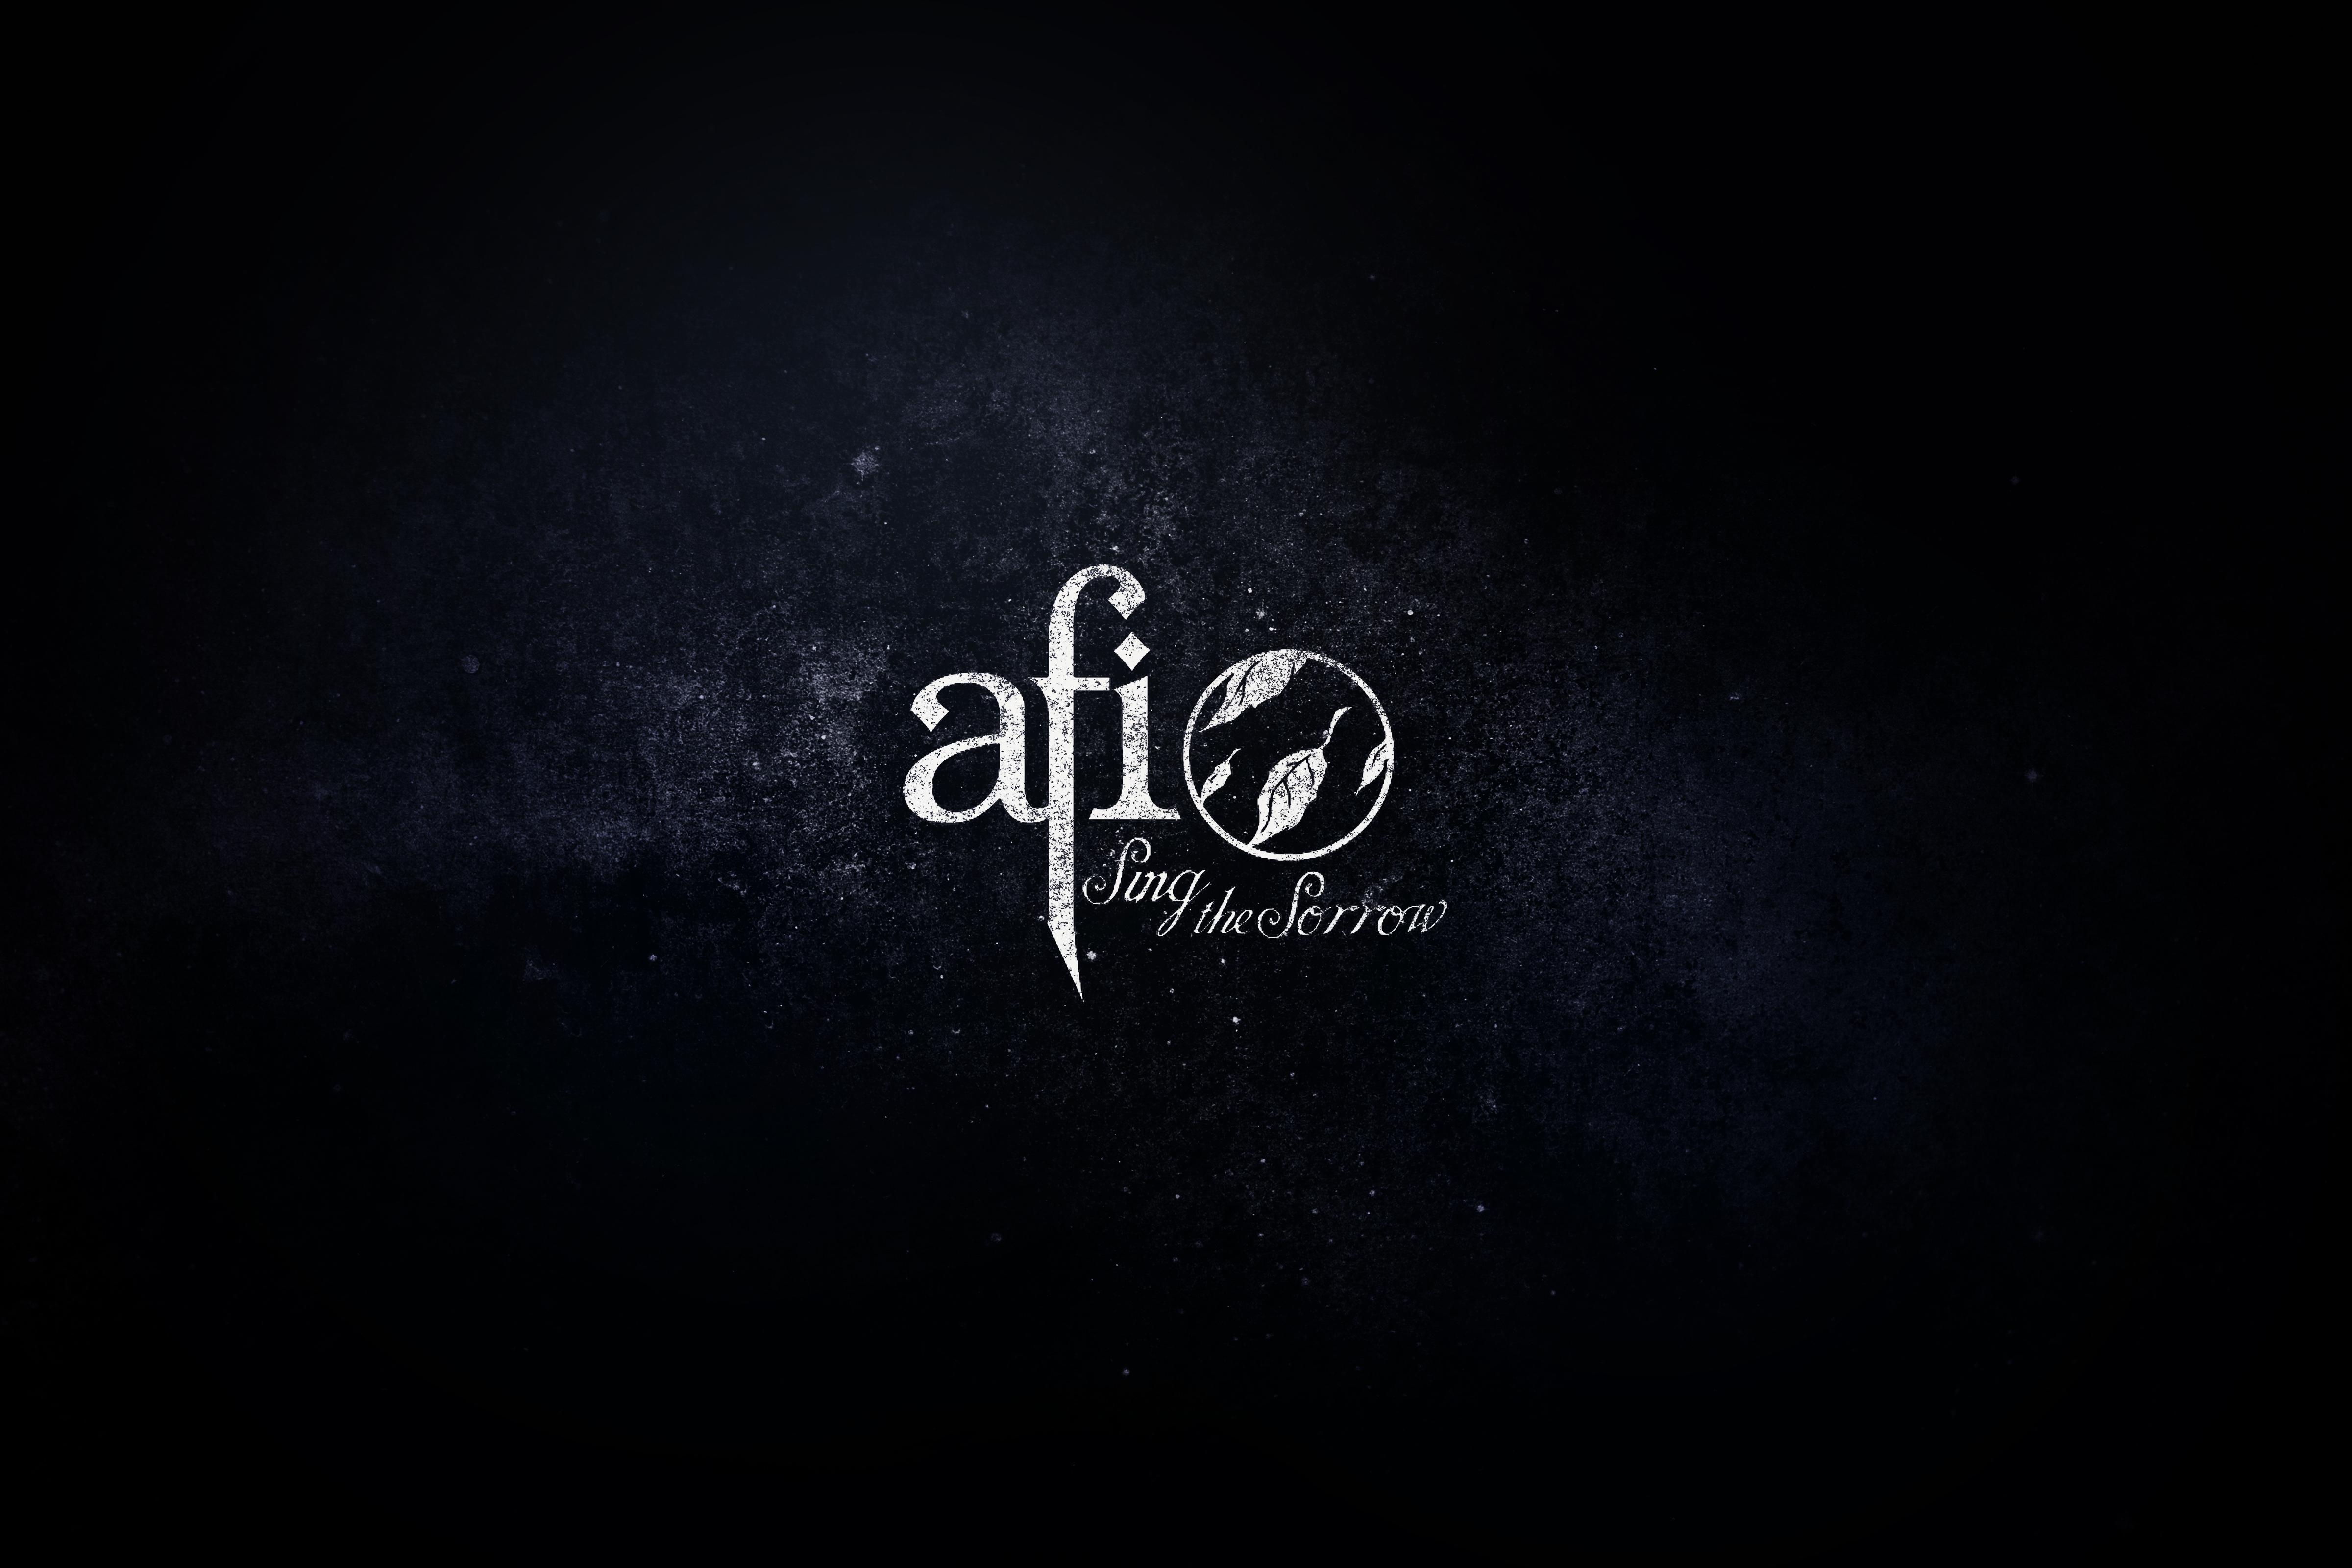 AFI HQ Album Art Inspired Wallpapers  Free Download  AFI